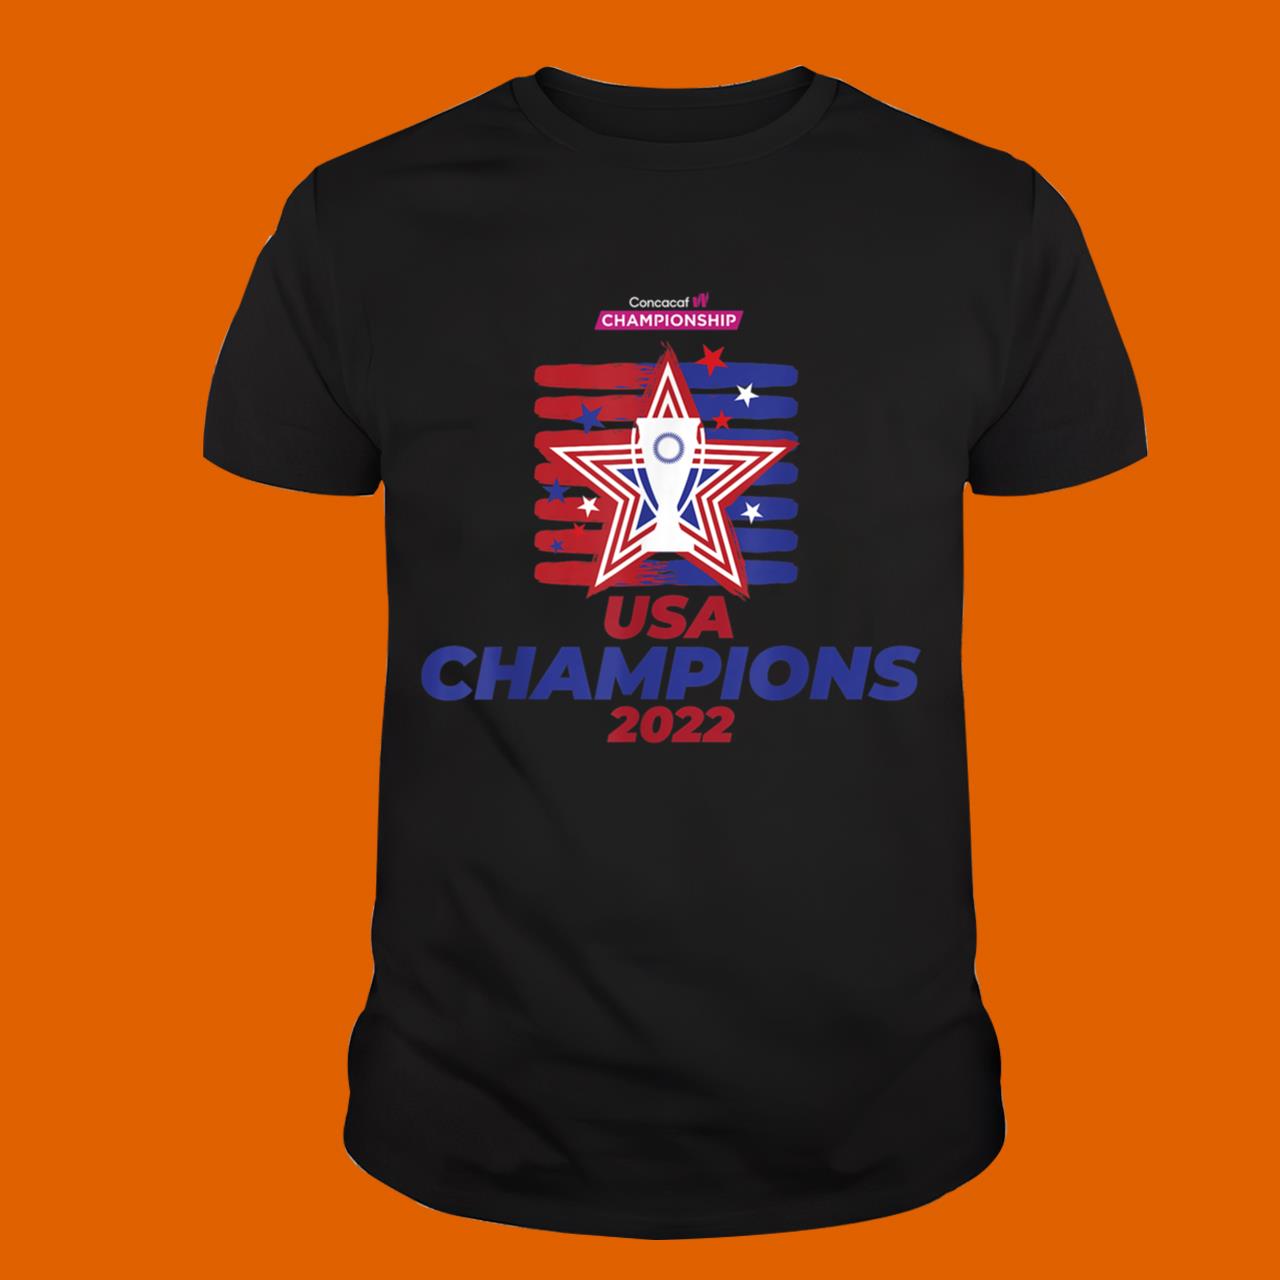 Concacaf W Championship – USA Champions 2022 T-Shirt